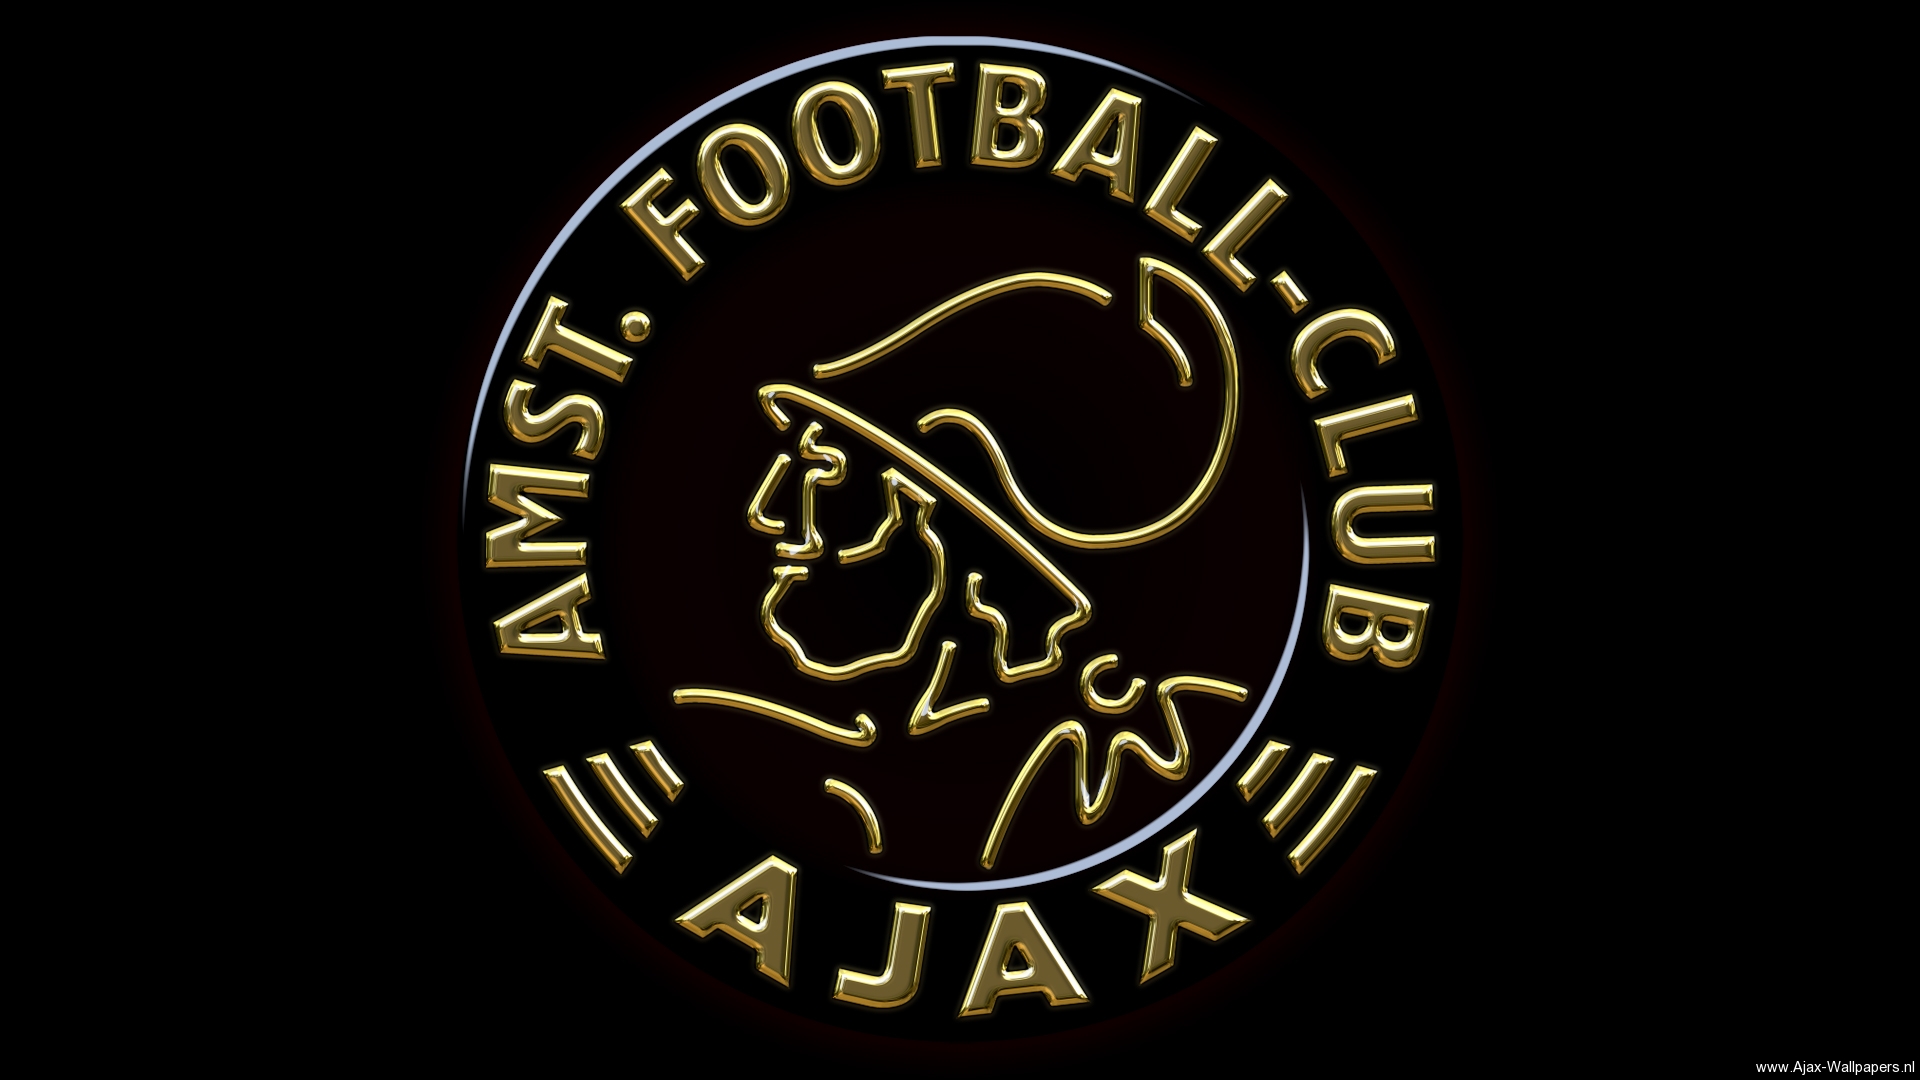 Descarga gratuita de fondo de pantalla para móvil de Fútbol, Logo, Emblema, Deporte, Afc Ajax.